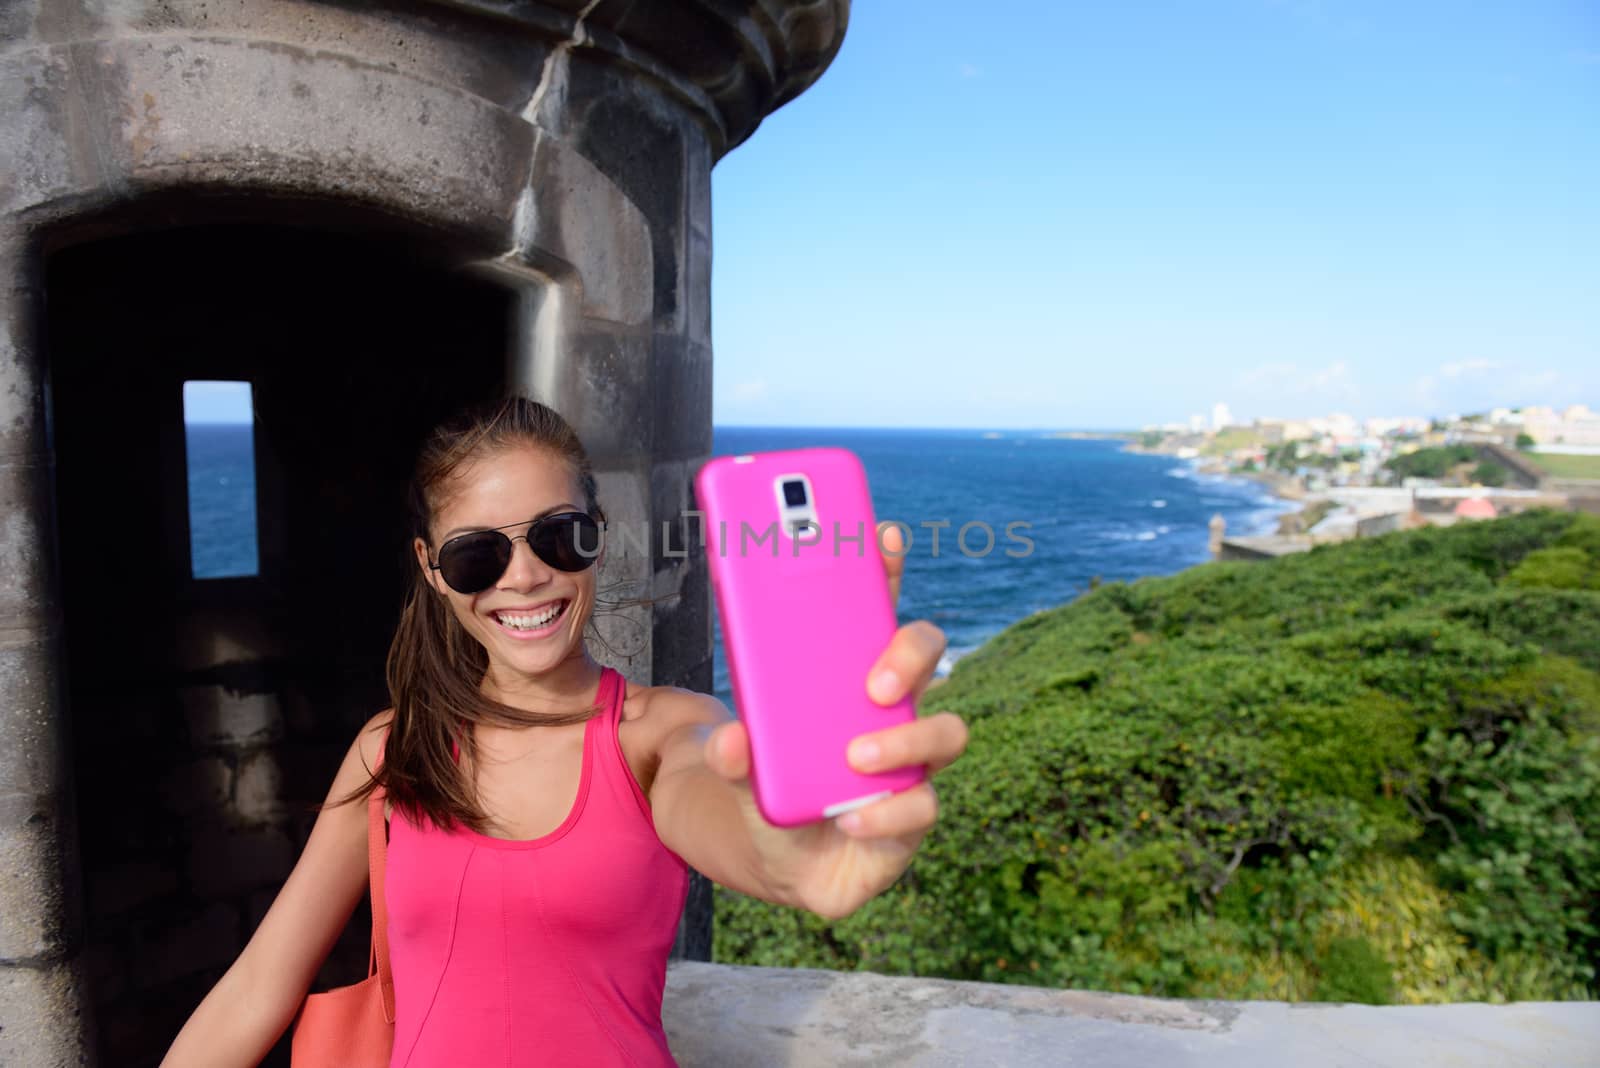 Tourist taking fun selfie at famous landmark. Travel woman holding a pink smartphone visiting Old San Juan's Castillo San Felipe Del Morro, the main attraction of the city of San Juan, Puerto Rico.